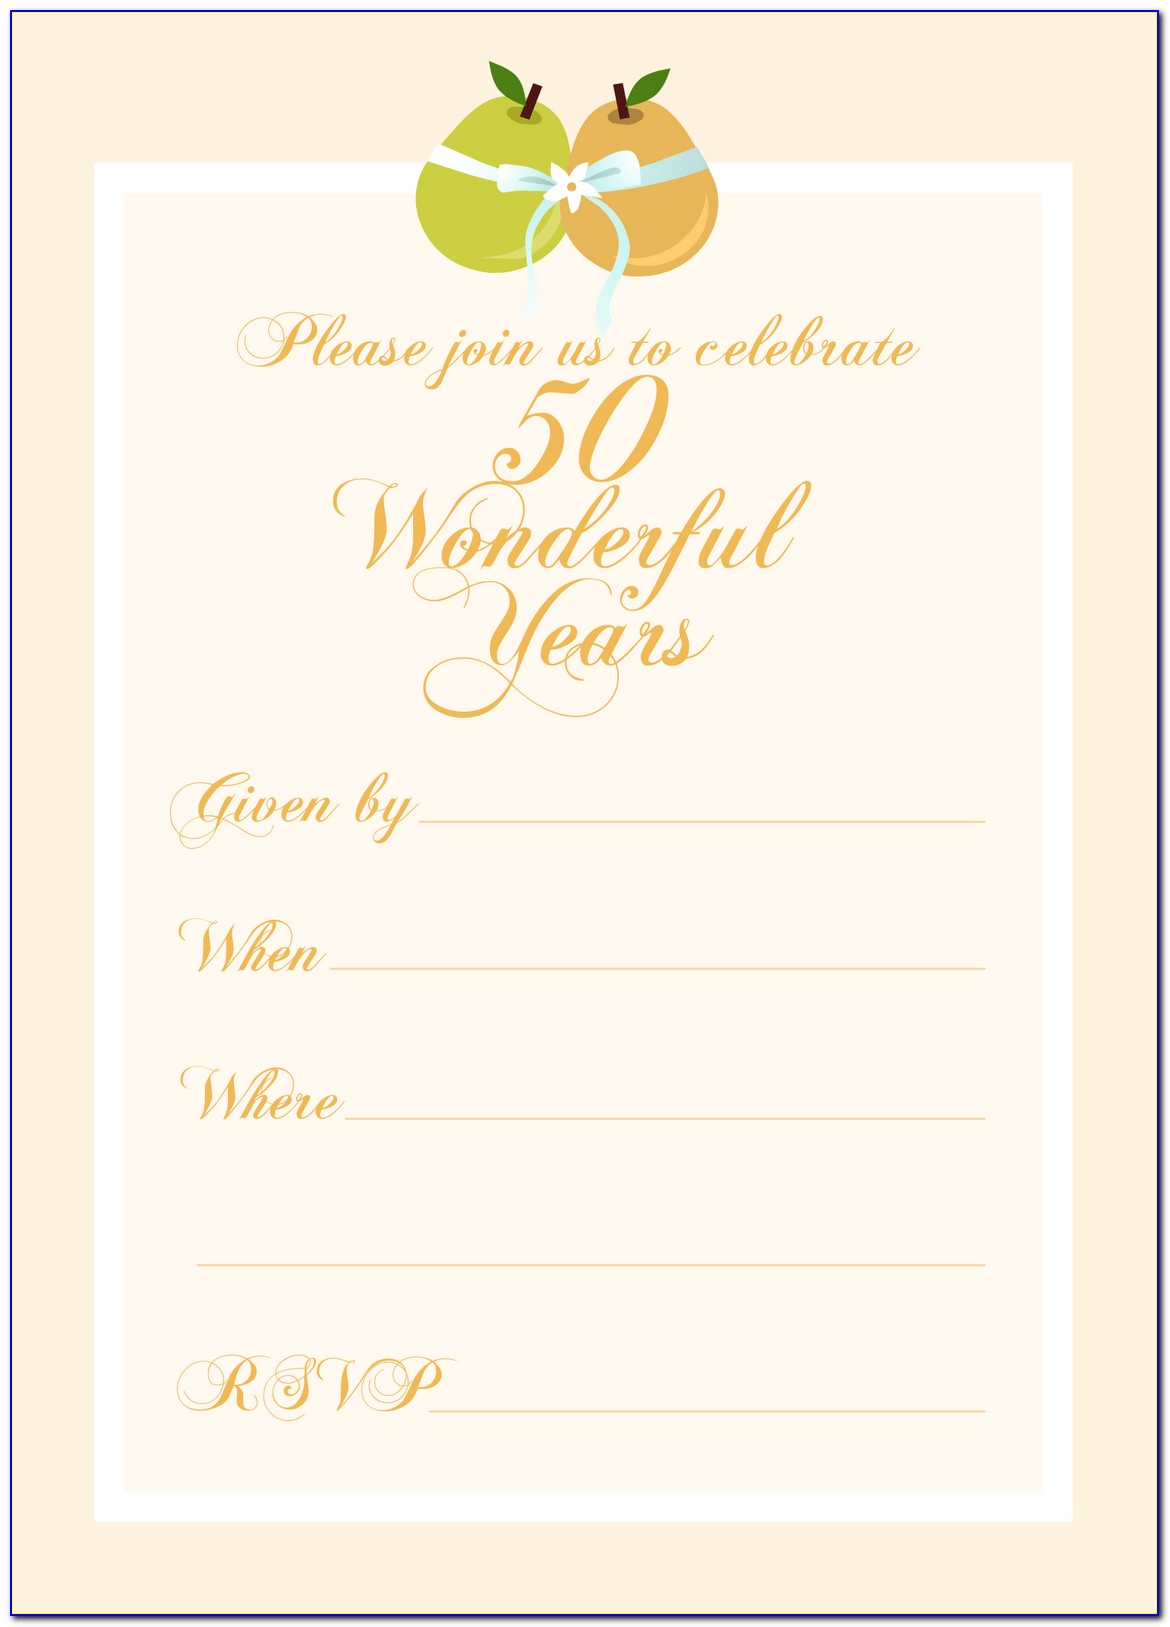 Free 50th Anniversary Invitation Templates